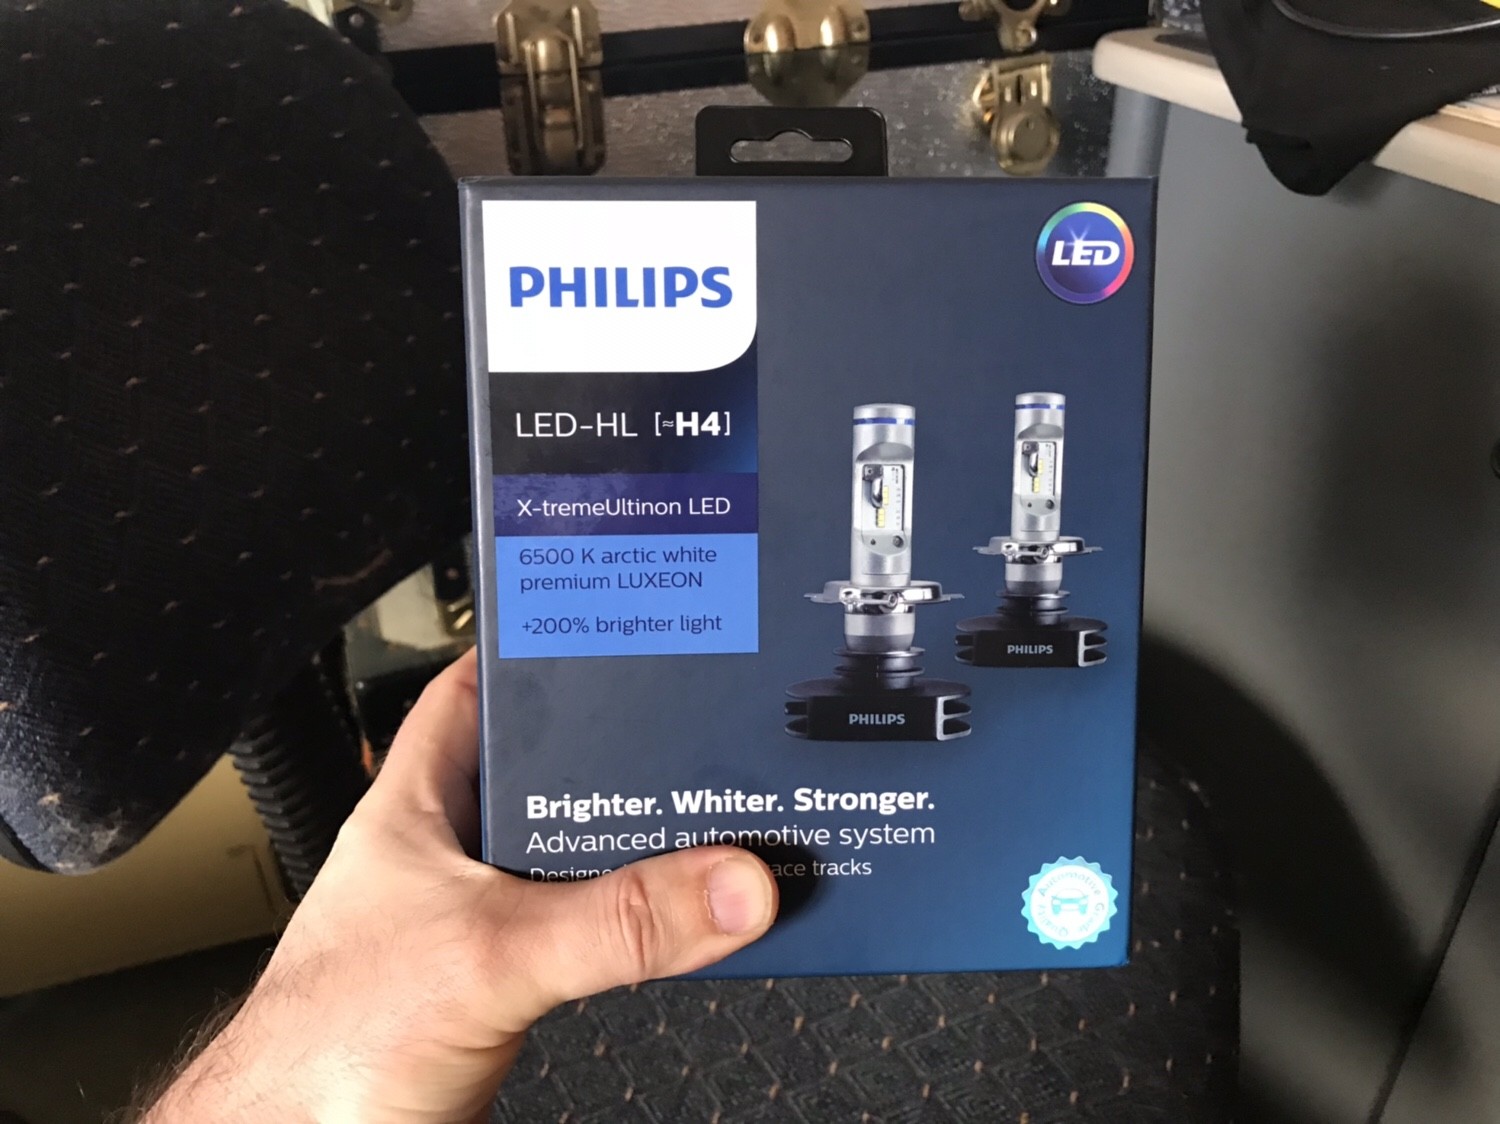 Farkles, farkles, farkles – Philips X-tremeUltinon LED bulbs